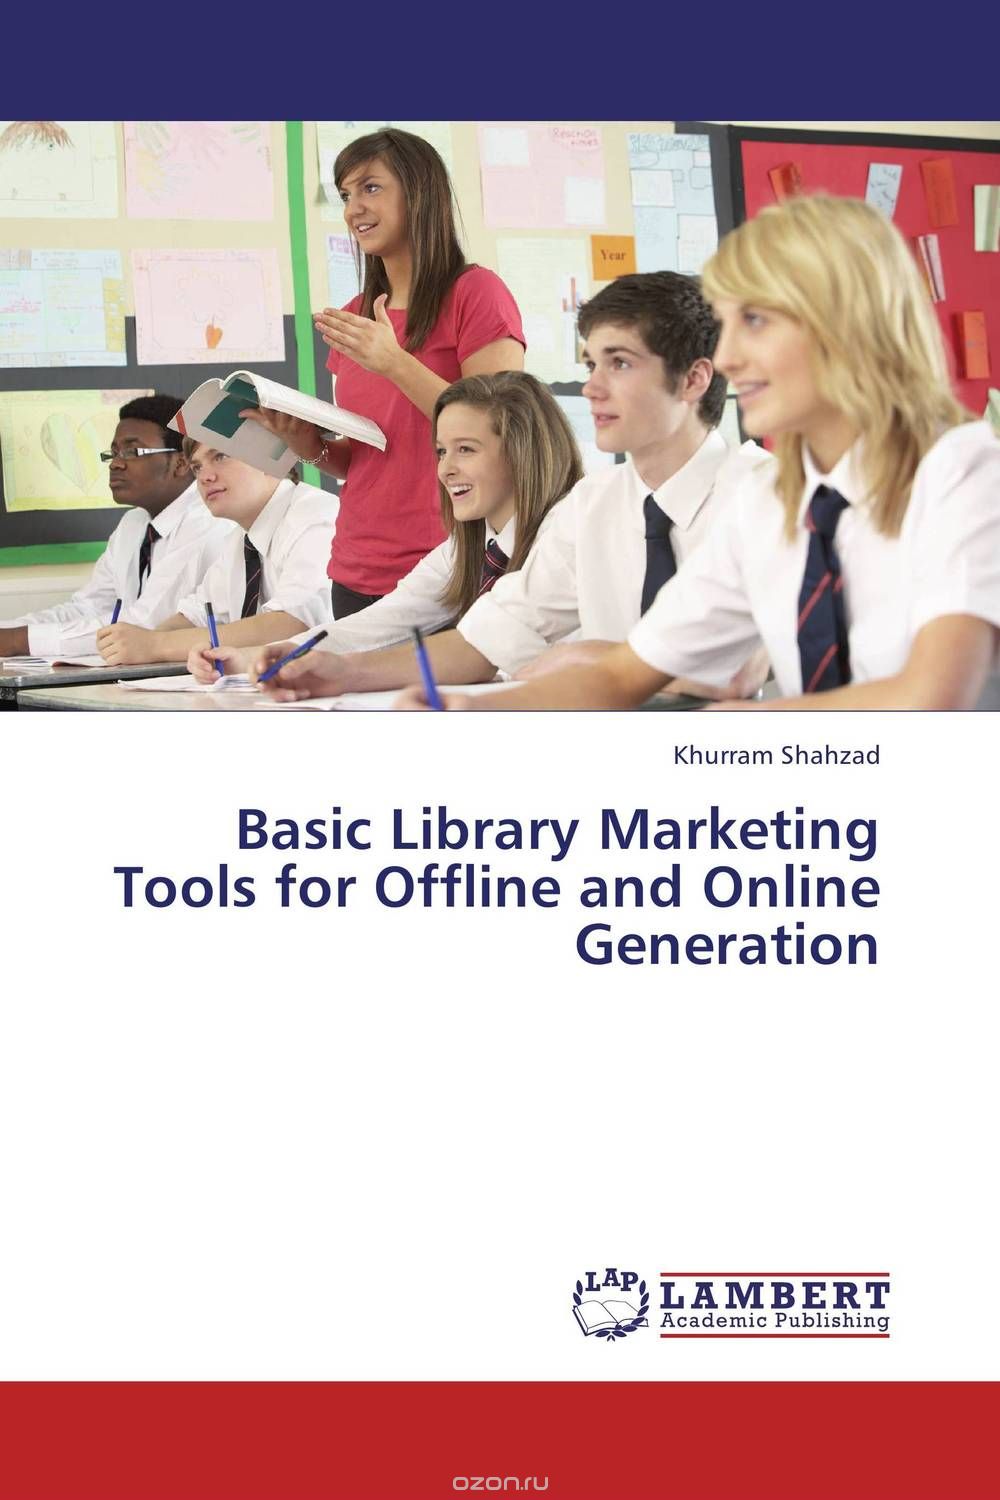 Скачать книгу "Basic Library Marketing Tools for Offline and Online Generation"